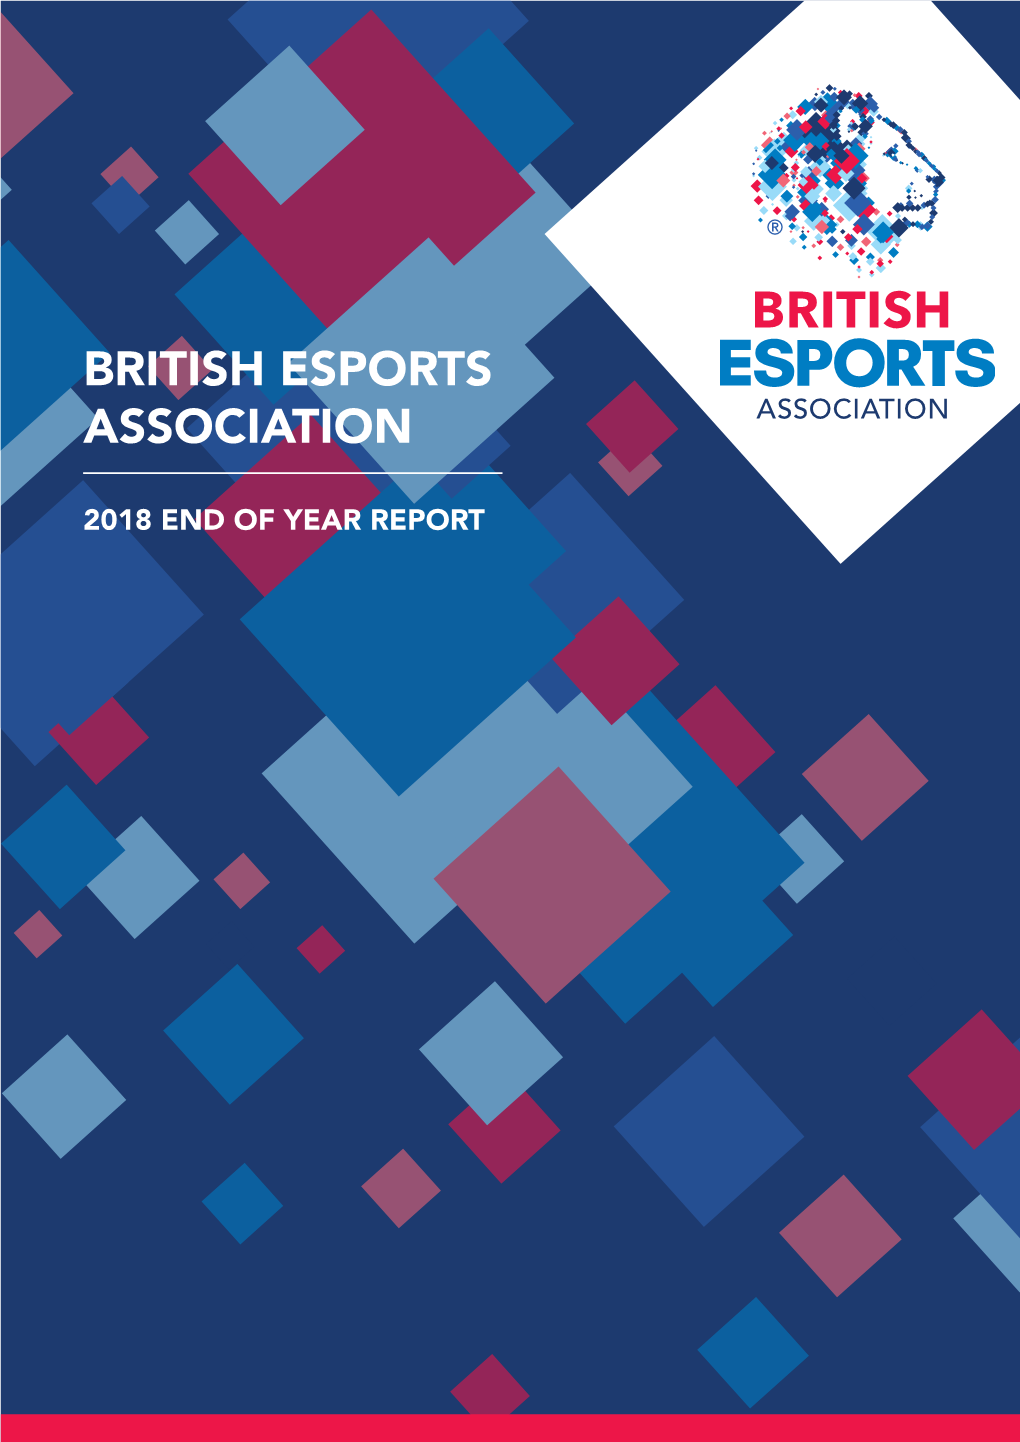 British Esports Association